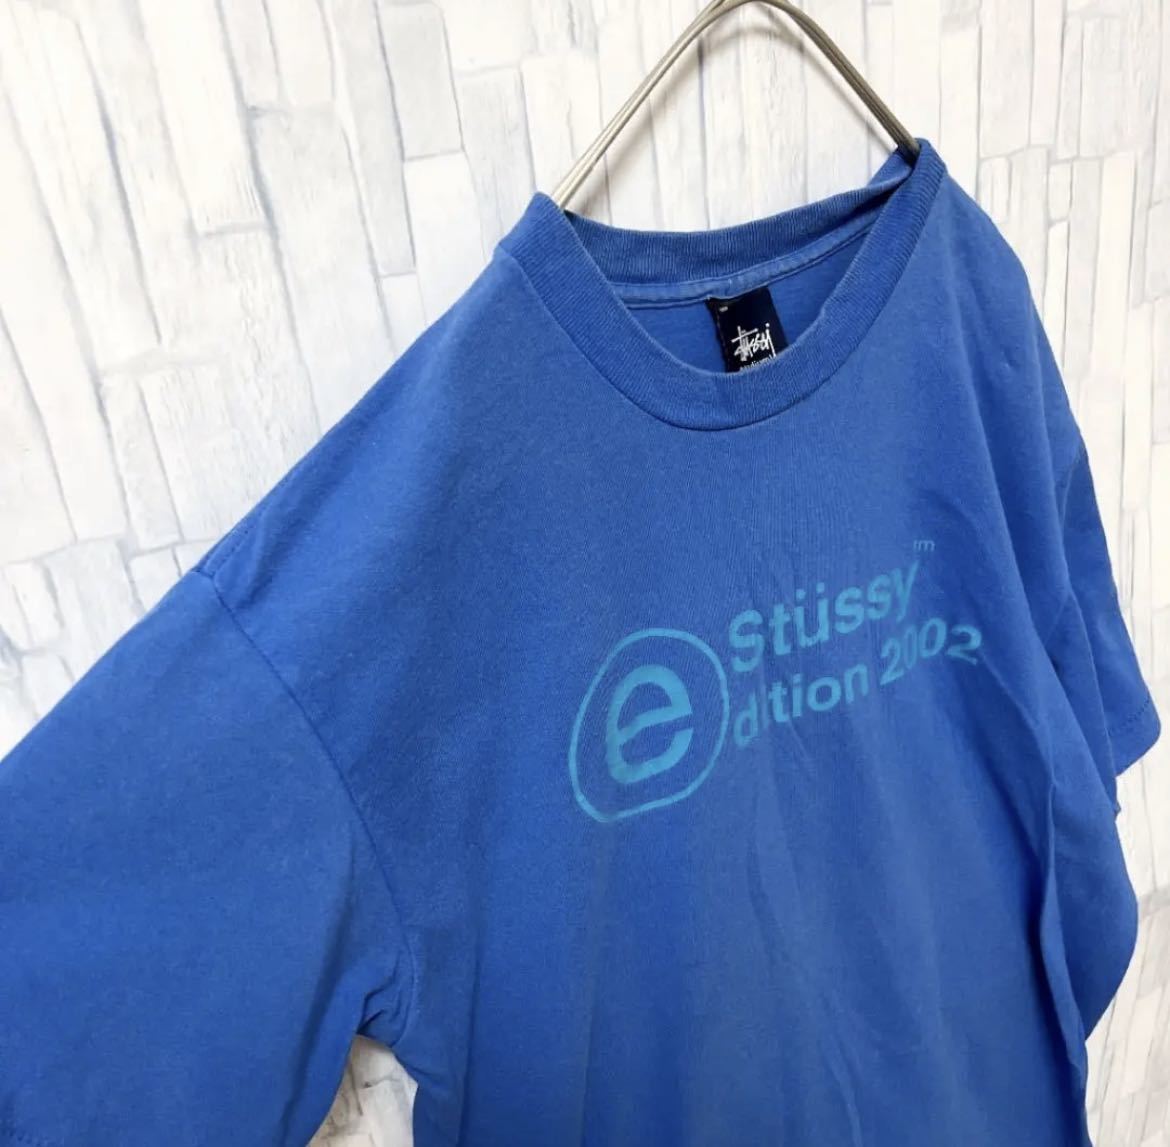 old stussy オールド ステューシー s 年代 ブルー 半袖 Tシャツ